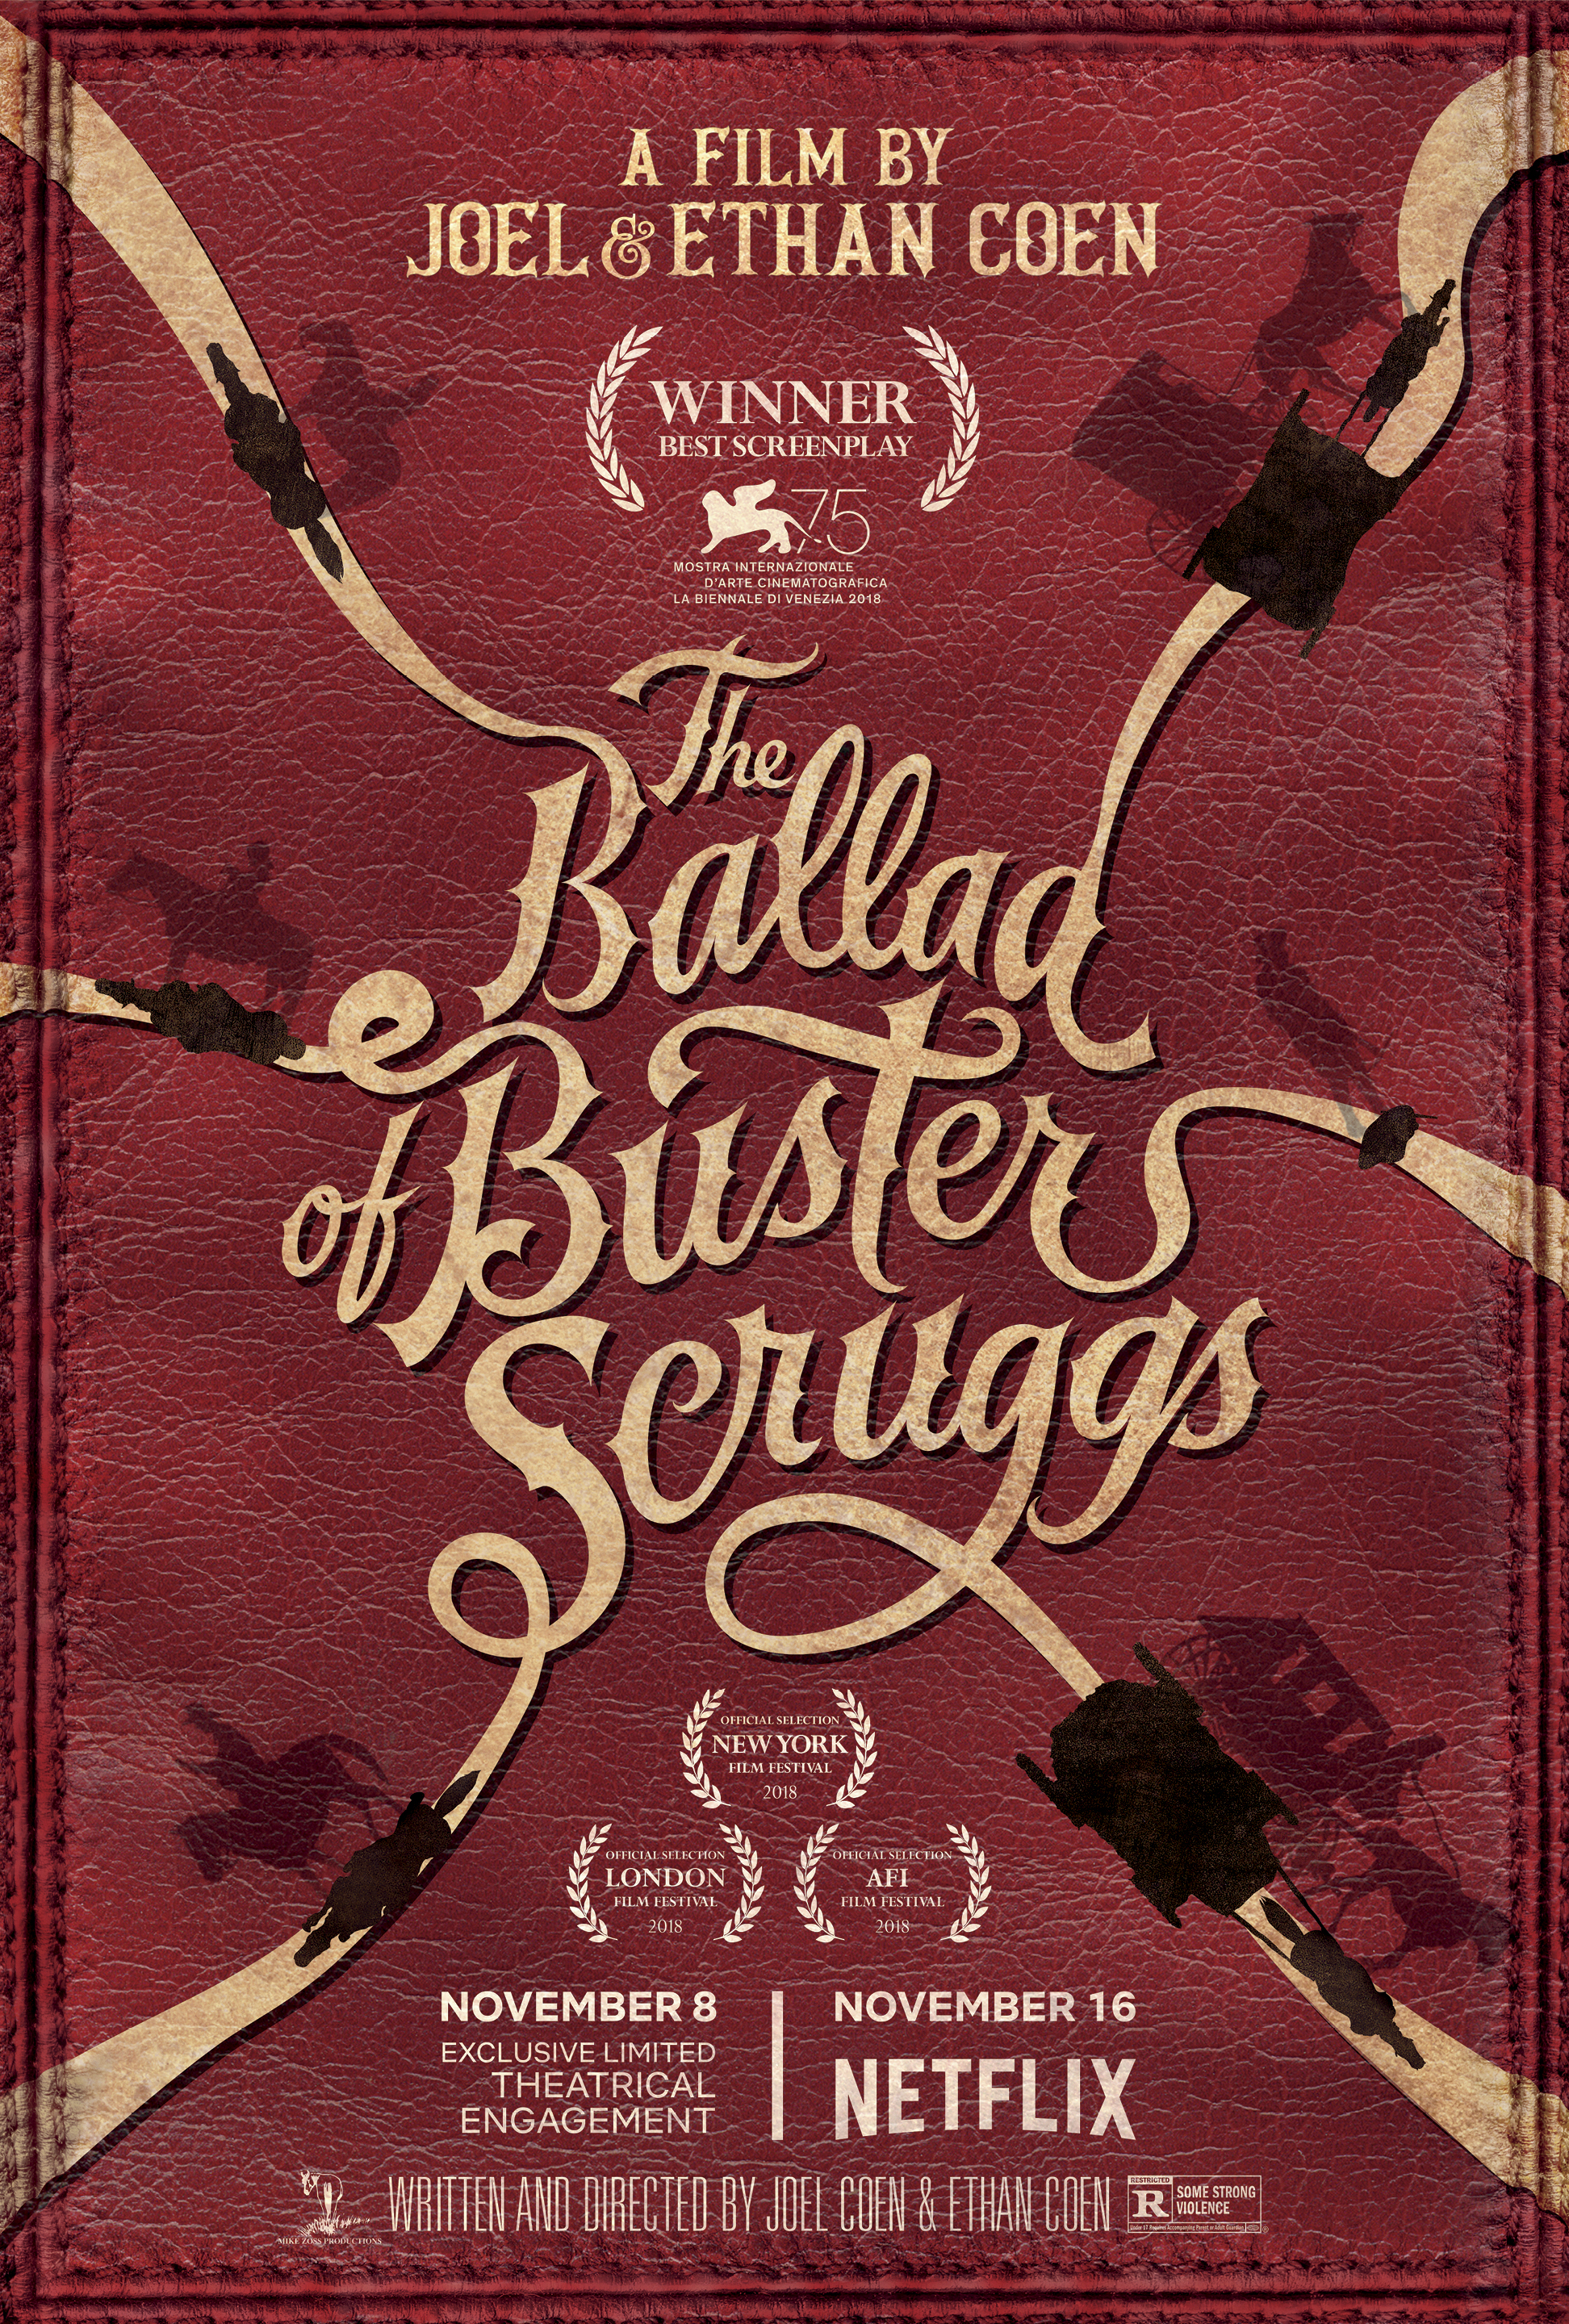 Nonton film The Ballad of Buster Scruggs layarkaca21 indoxx1 ganool online streaming terbaru